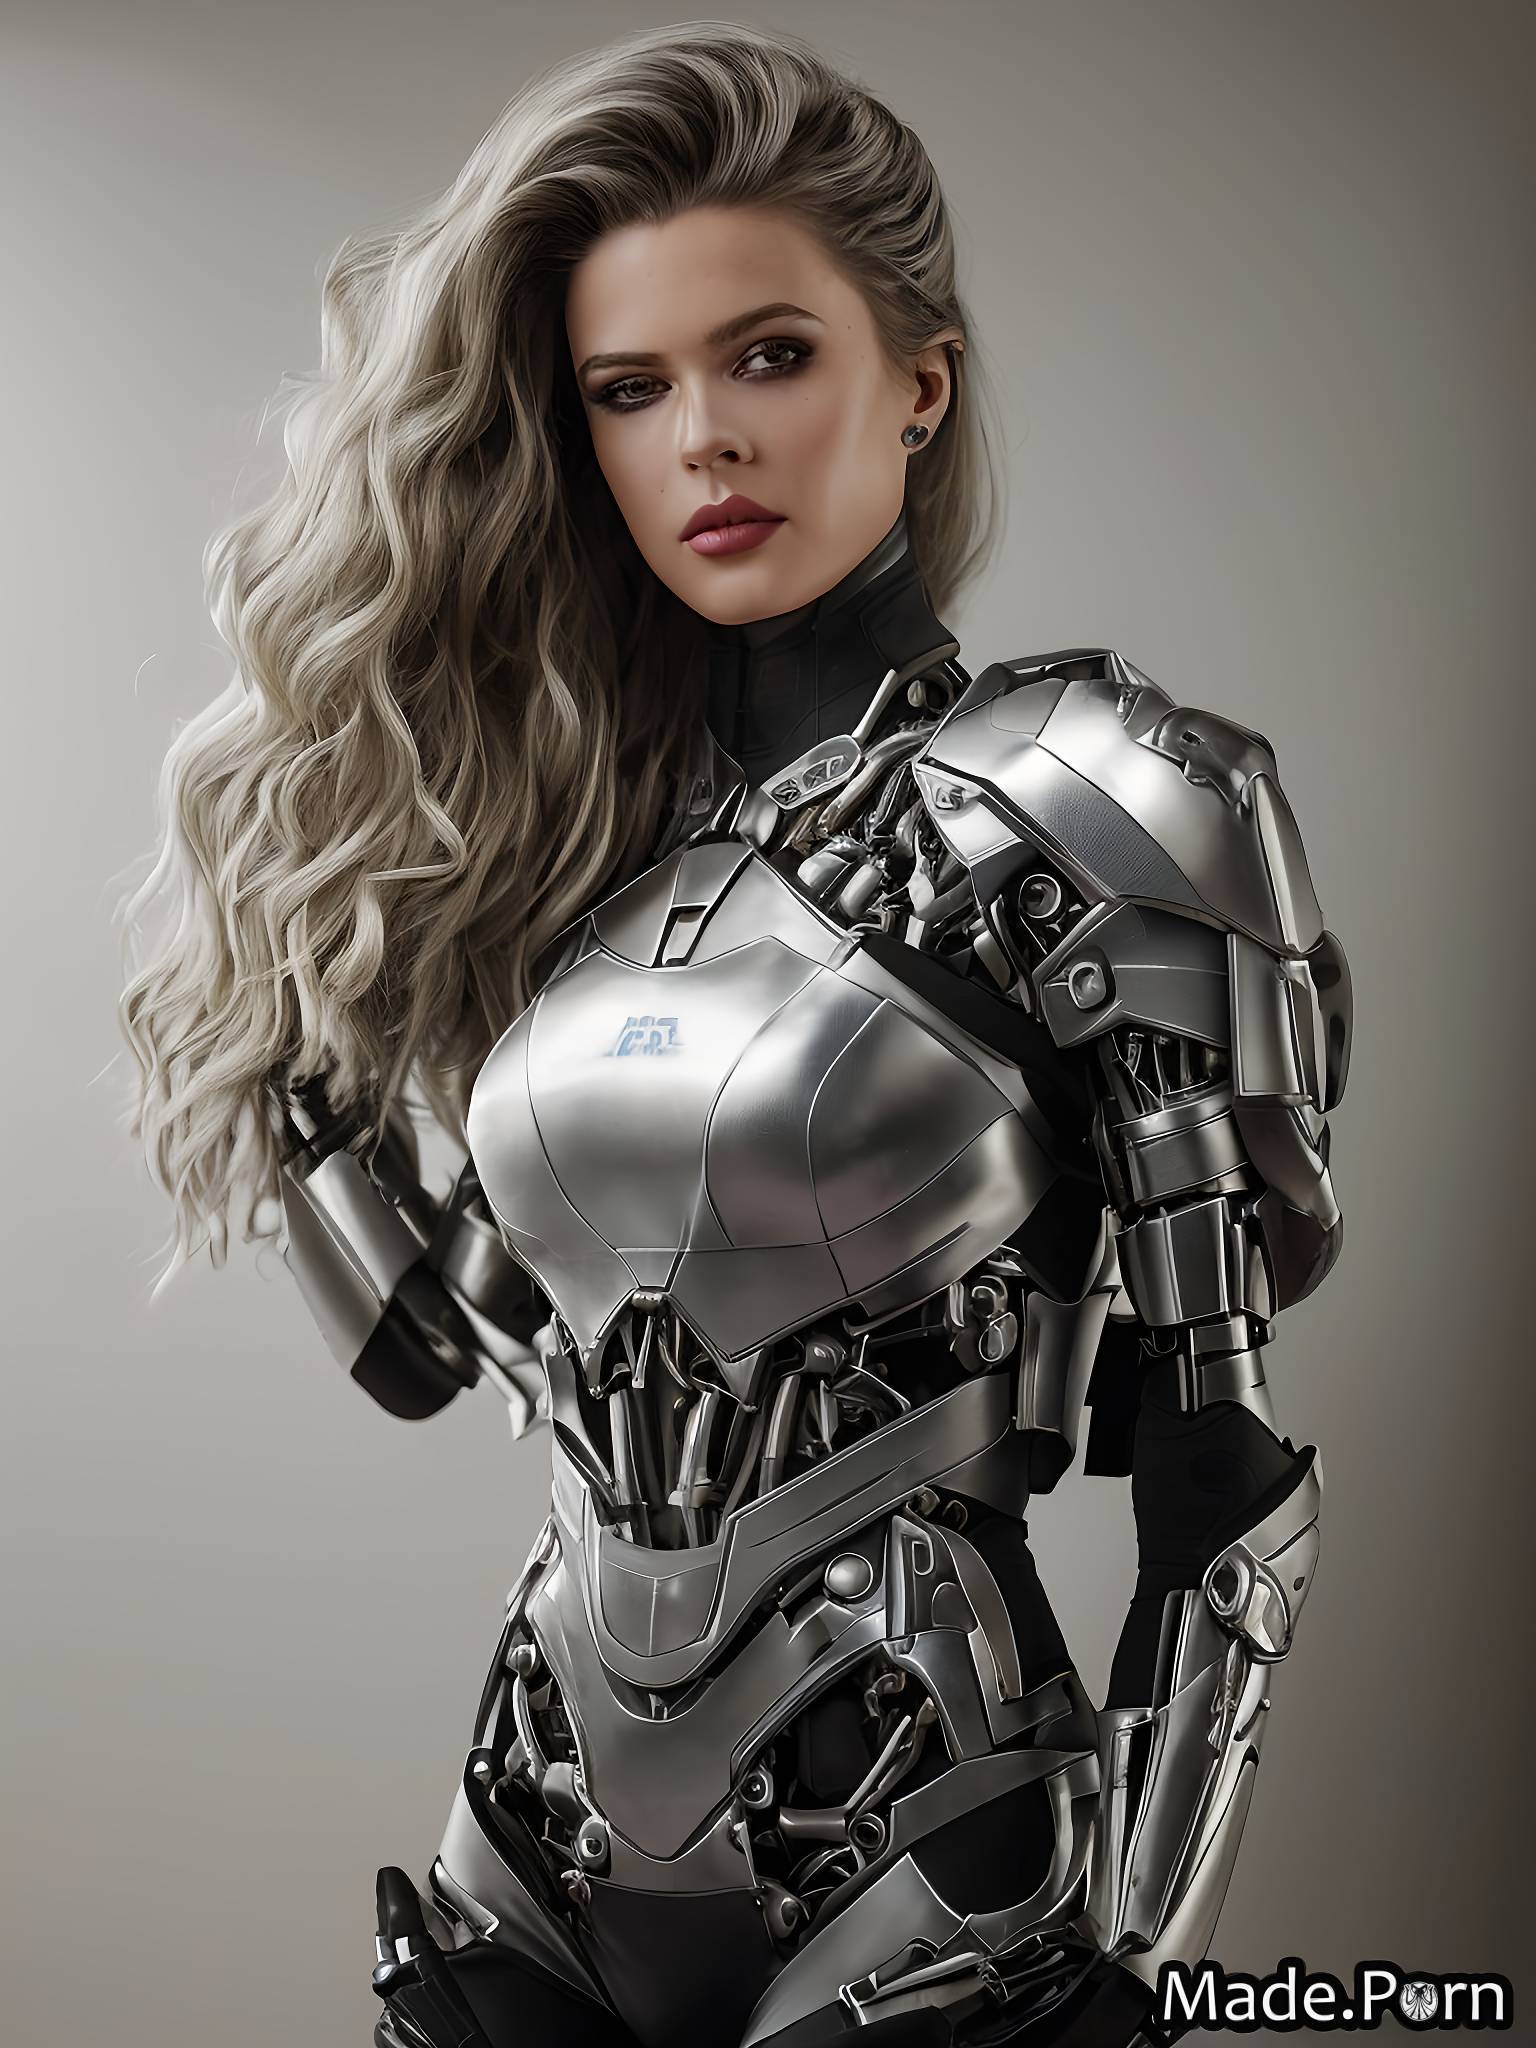 cyborg woman photo studio standing photo anodized metal chrome